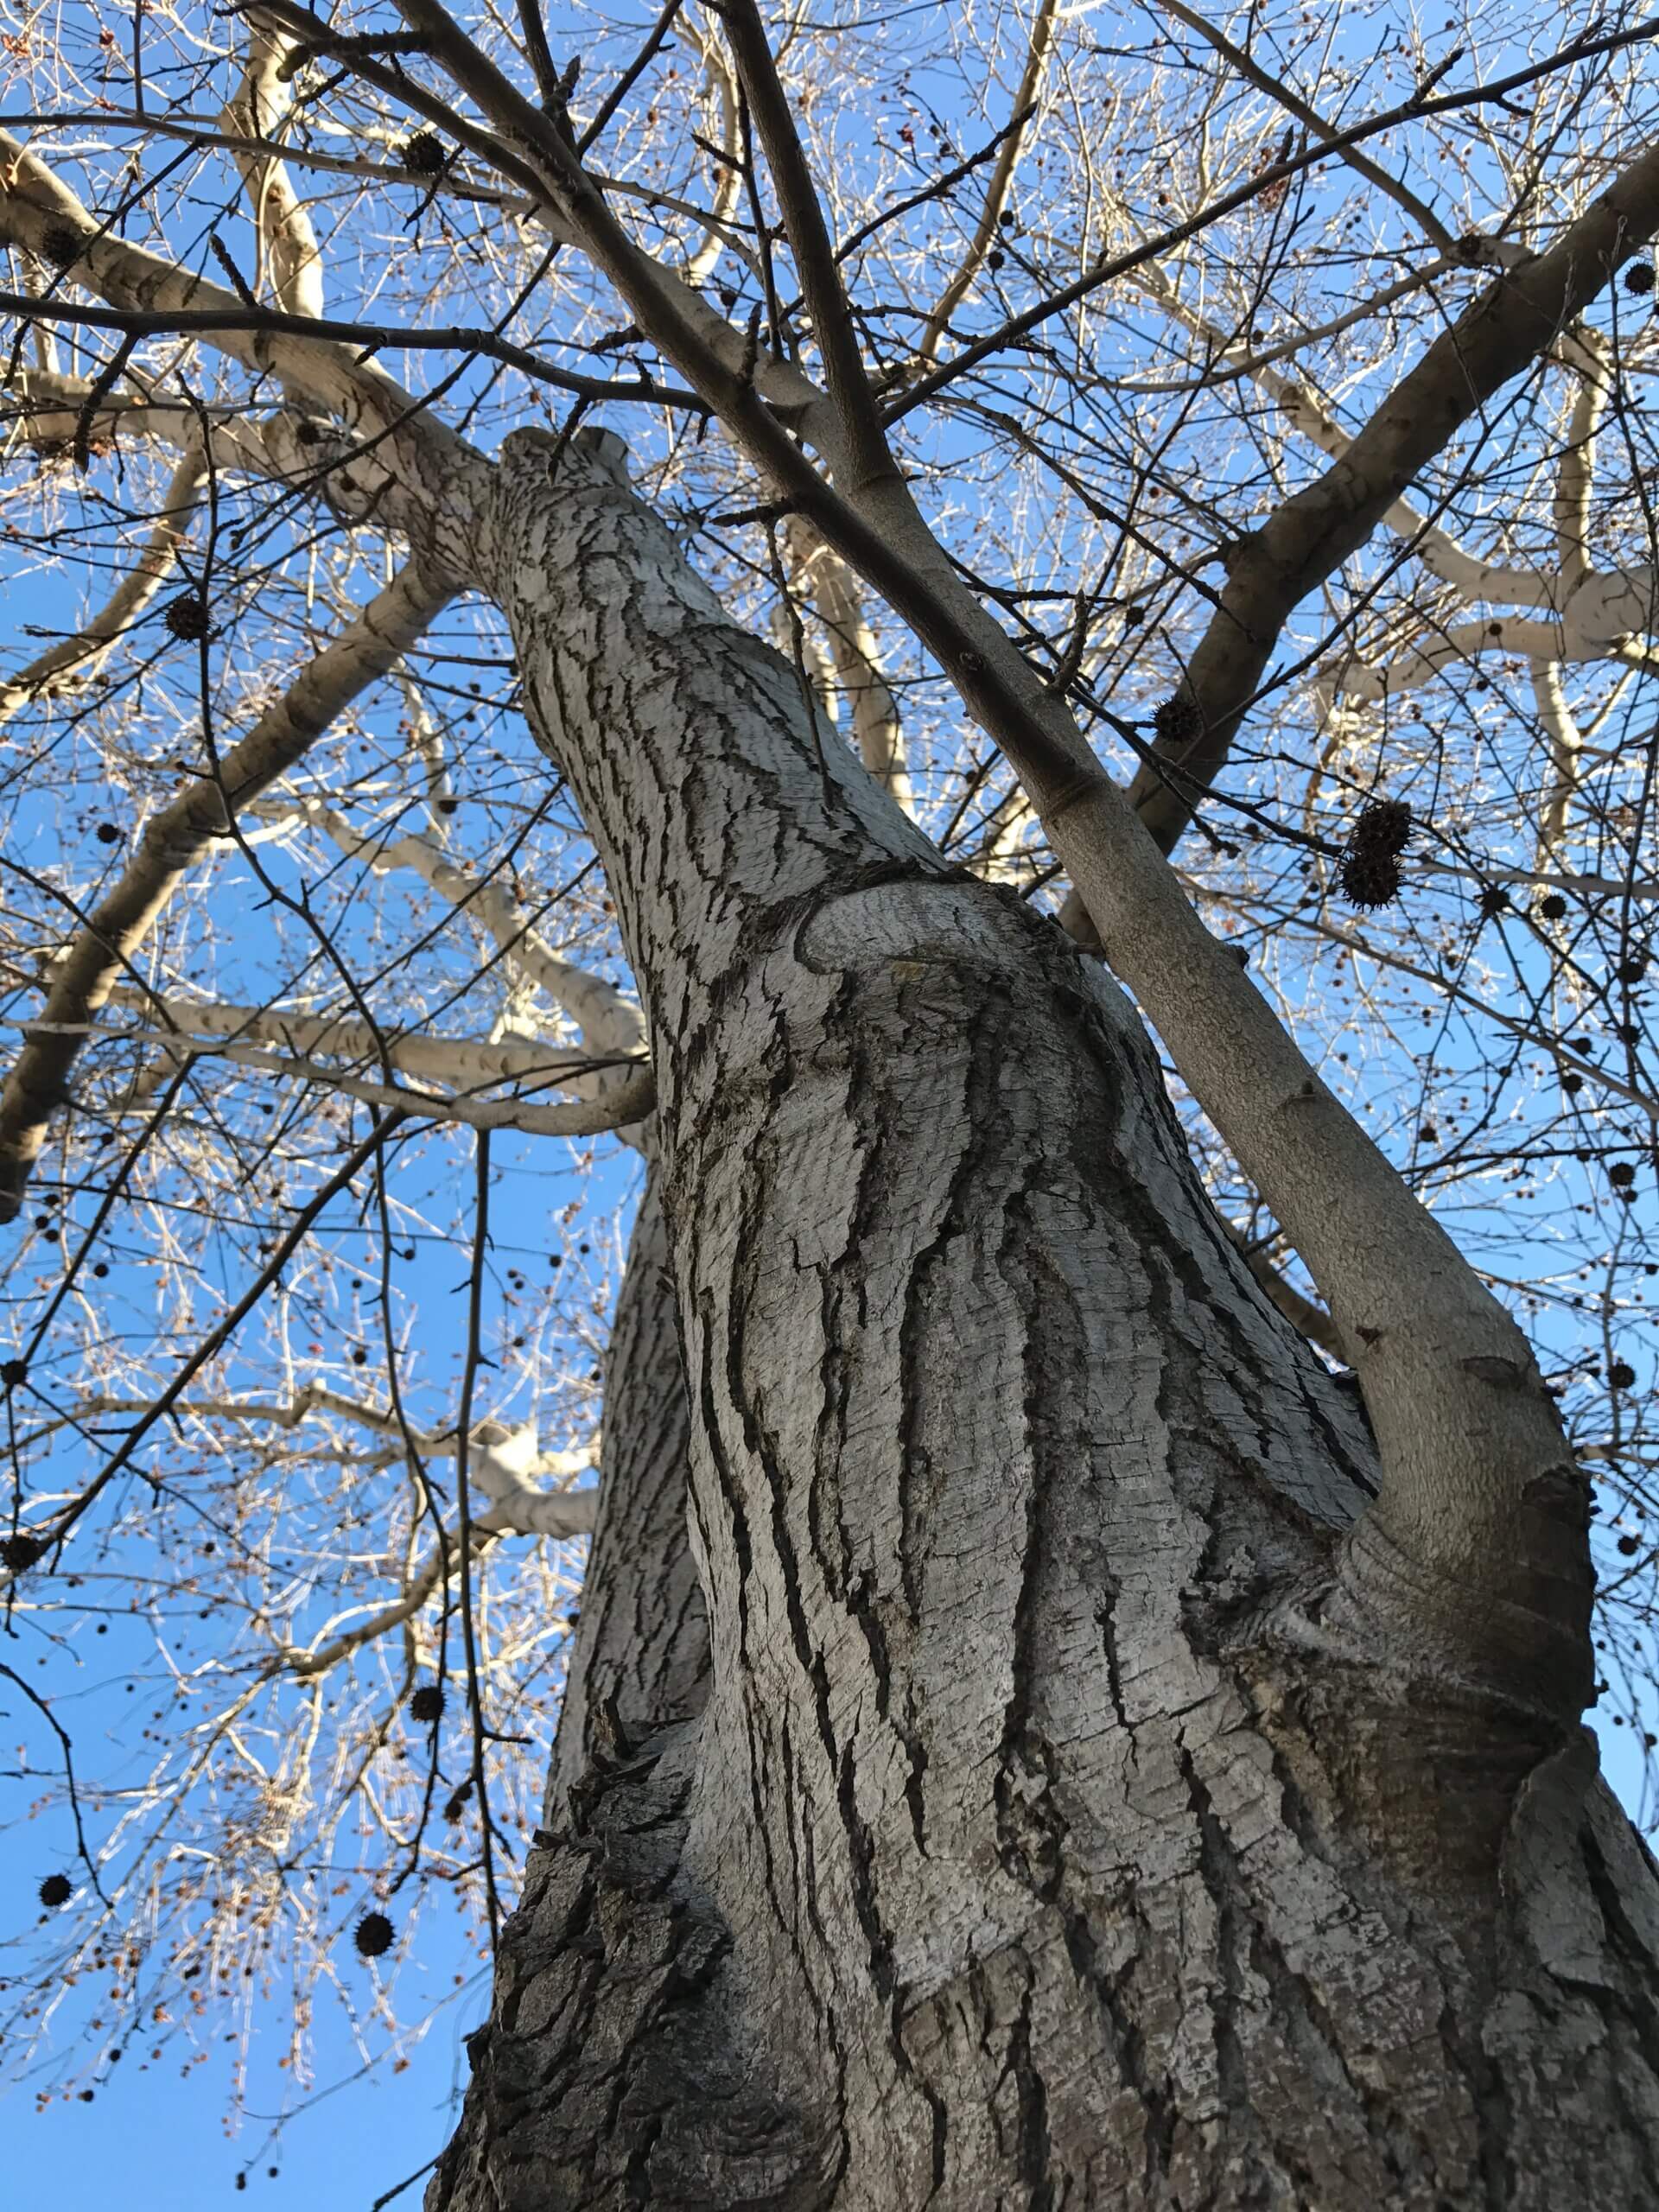 Tree reach for the sky